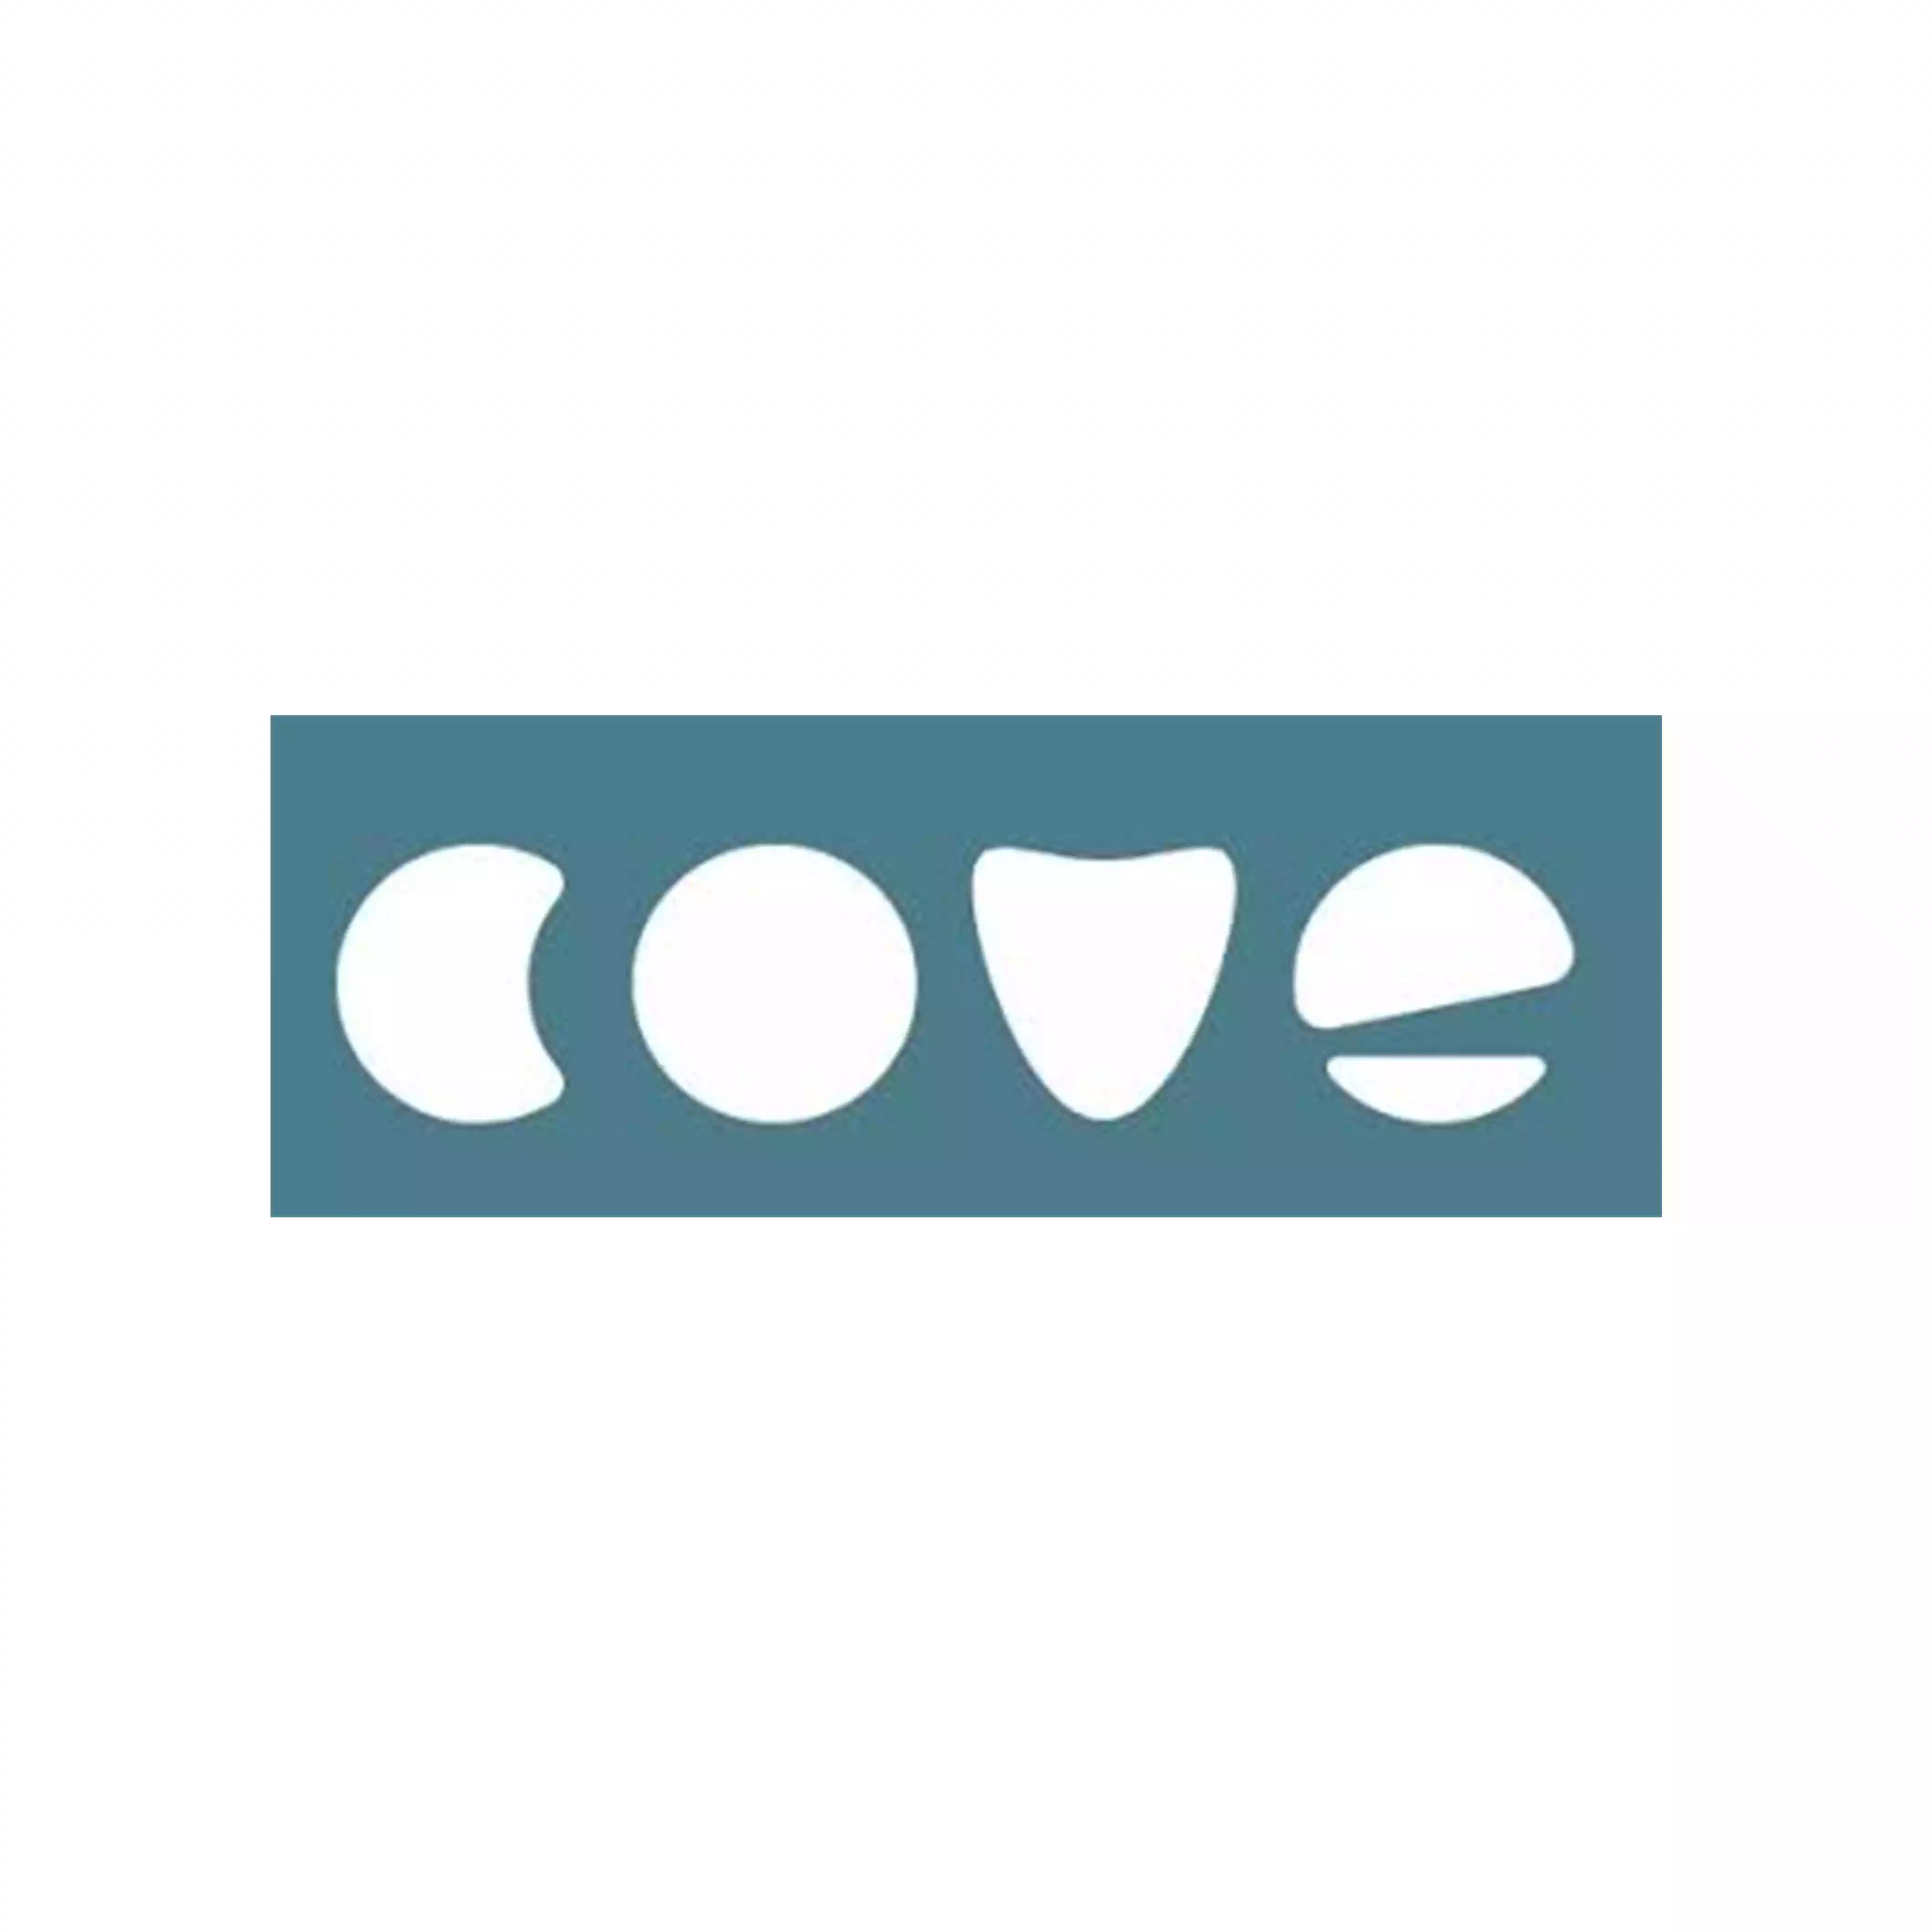 Shop Feel cove logo